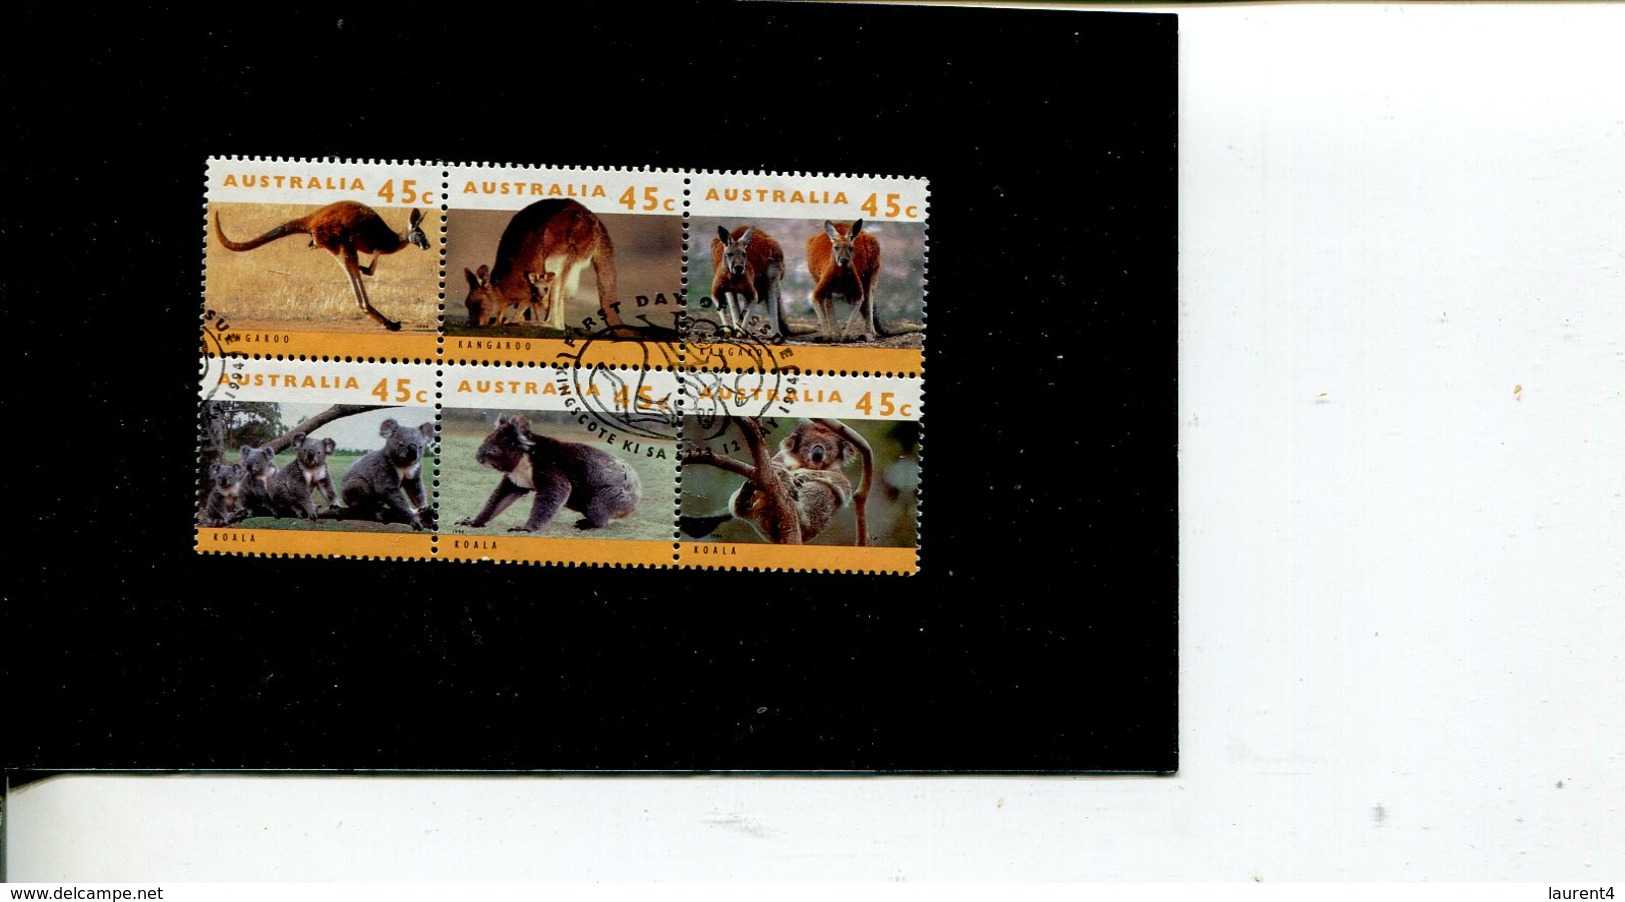 (stamps 999 - 29-09-2018) Australia - Kangaroo And Koala Block Of 6 - Used - 1994 - Sheets, Plate Blocks &  Multiples